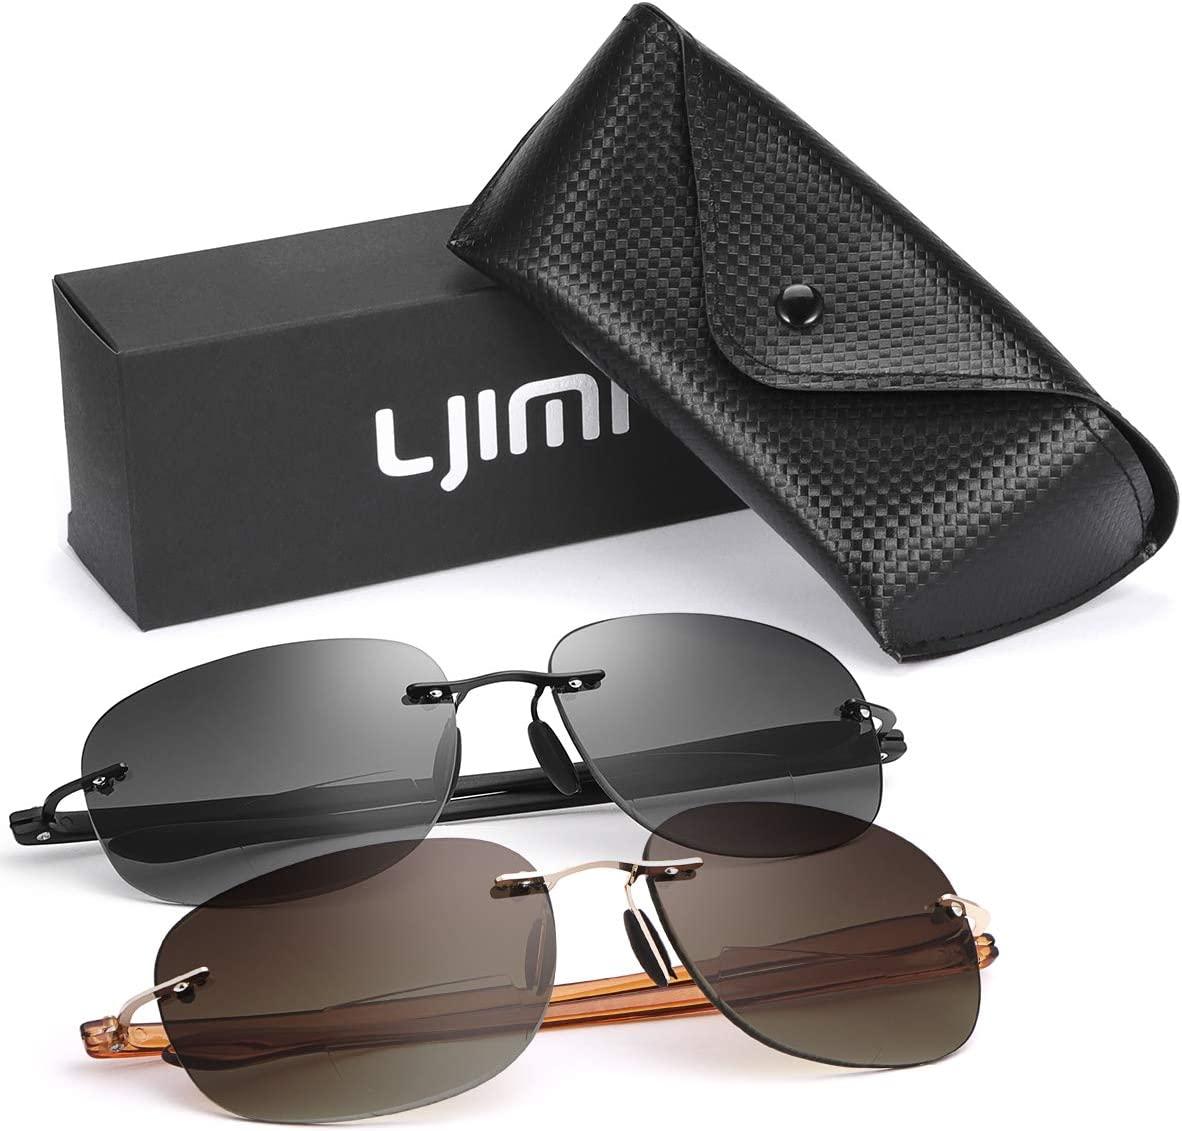 Rimless Bifocal Reading Glasses UV400 Protection Sport Sunglasses